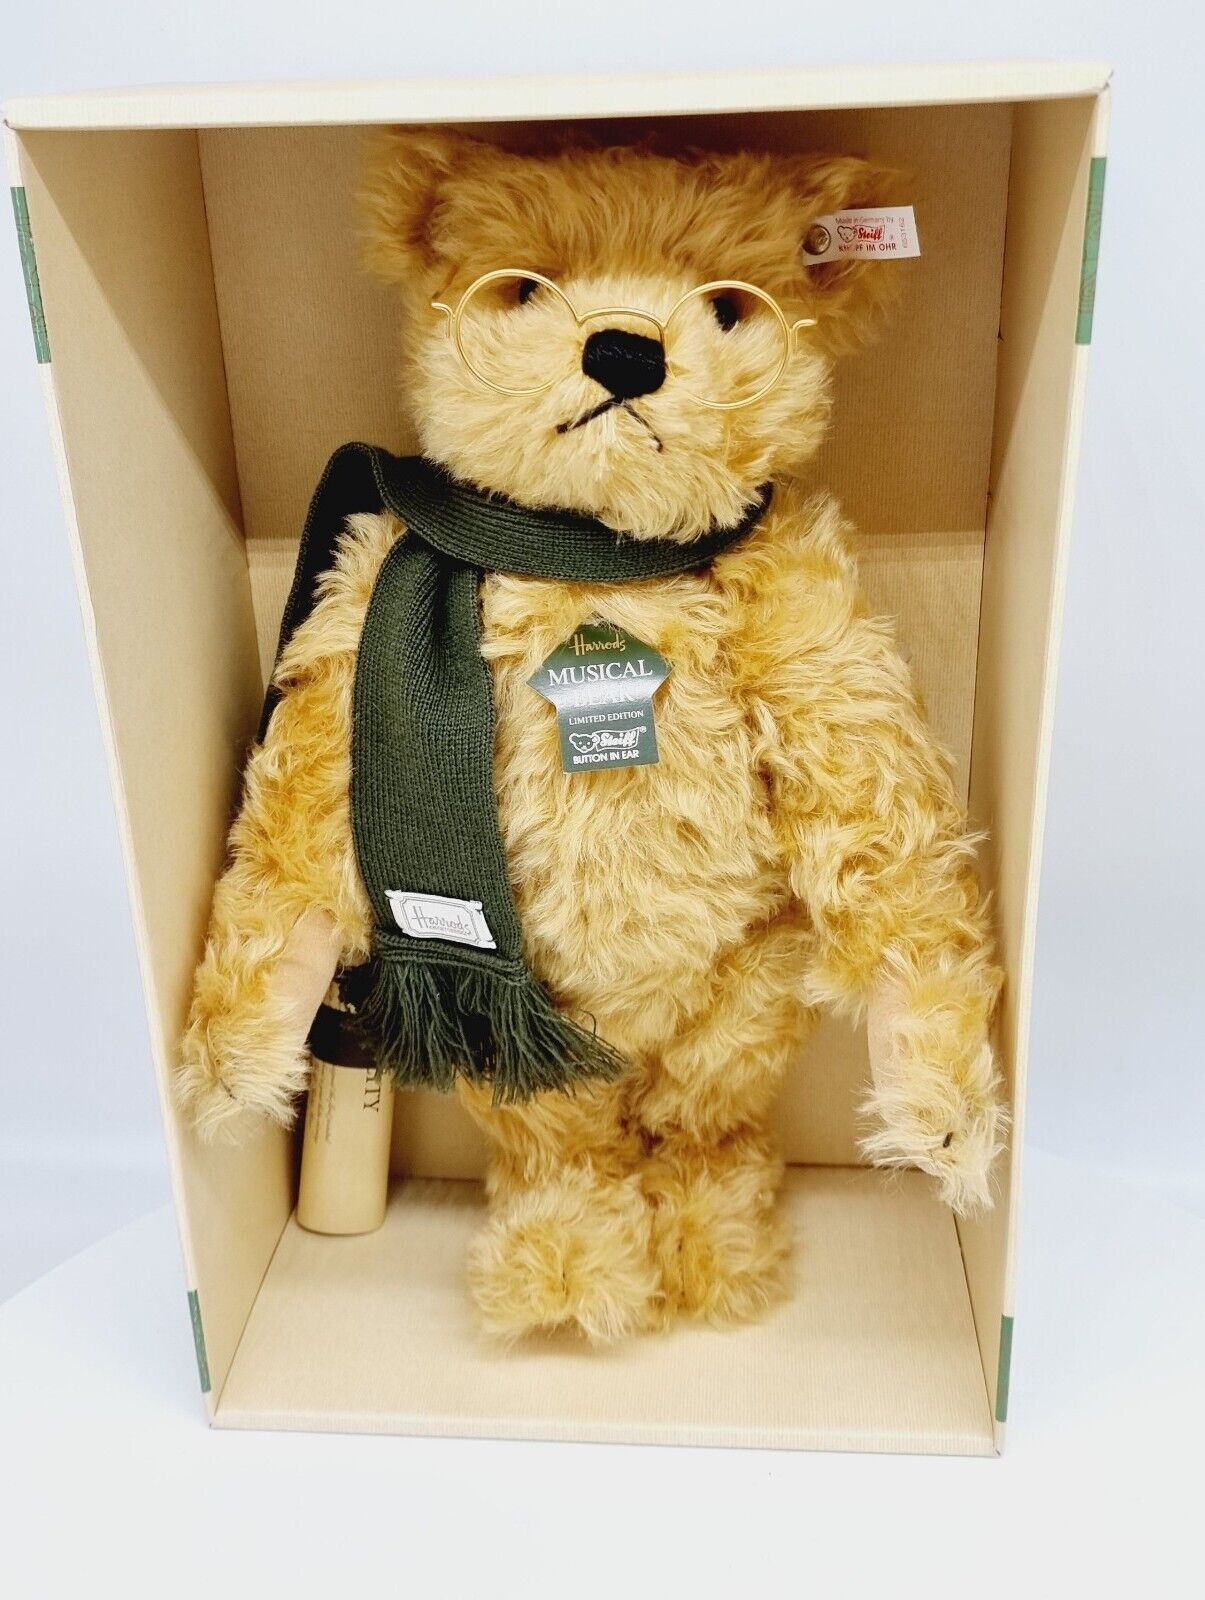 Steiff 653162 Musical Teddybär College Bear für Harrods limitiert 2000 aus 1996